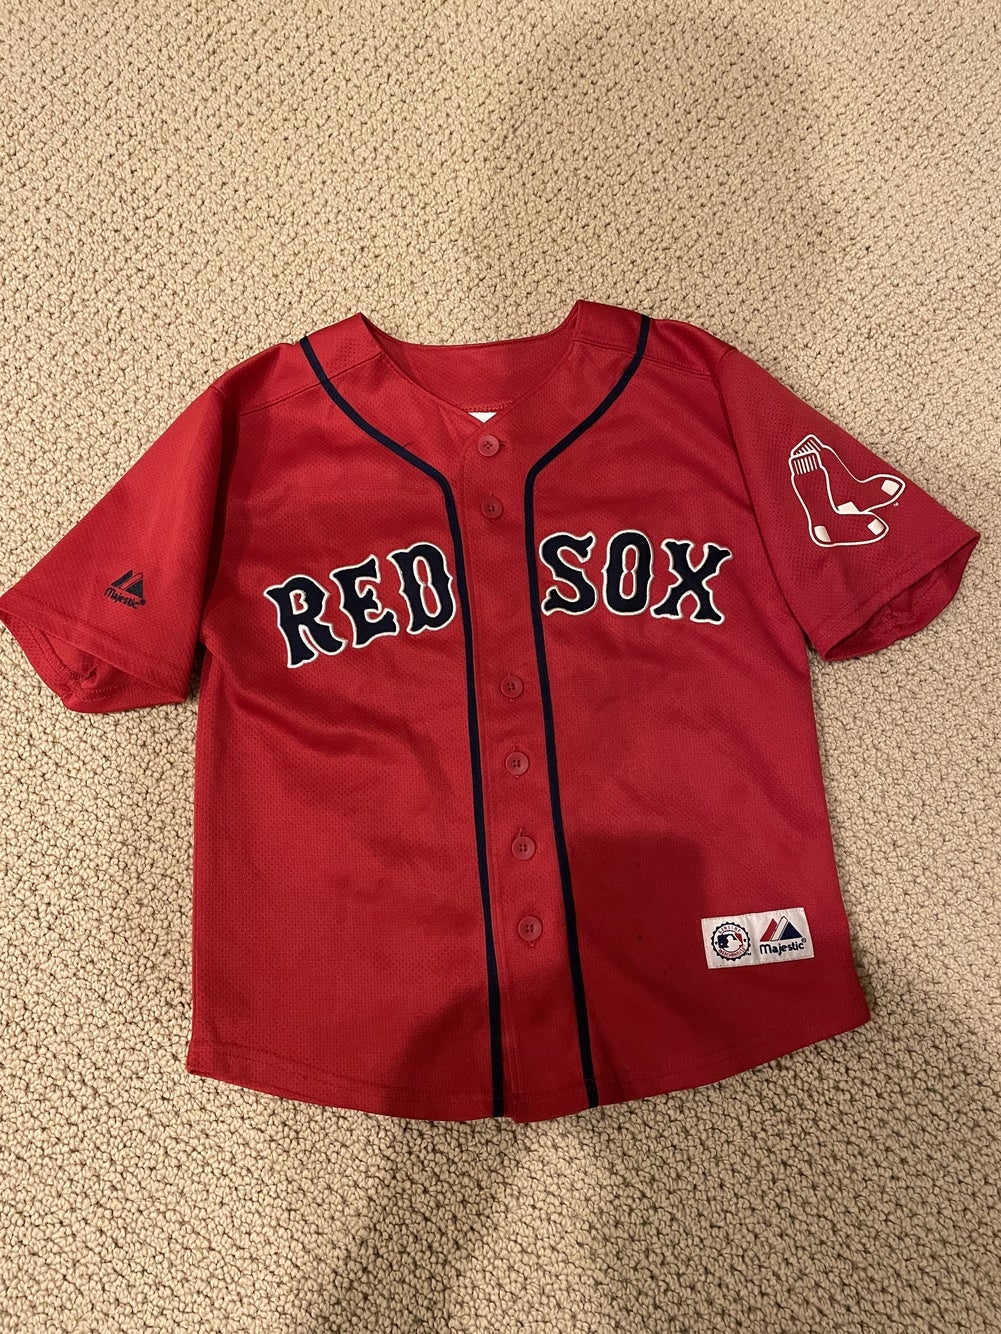 Women's #15 Dustin Pedroia Boston Red Sox Baseball Jerseys -White&Red